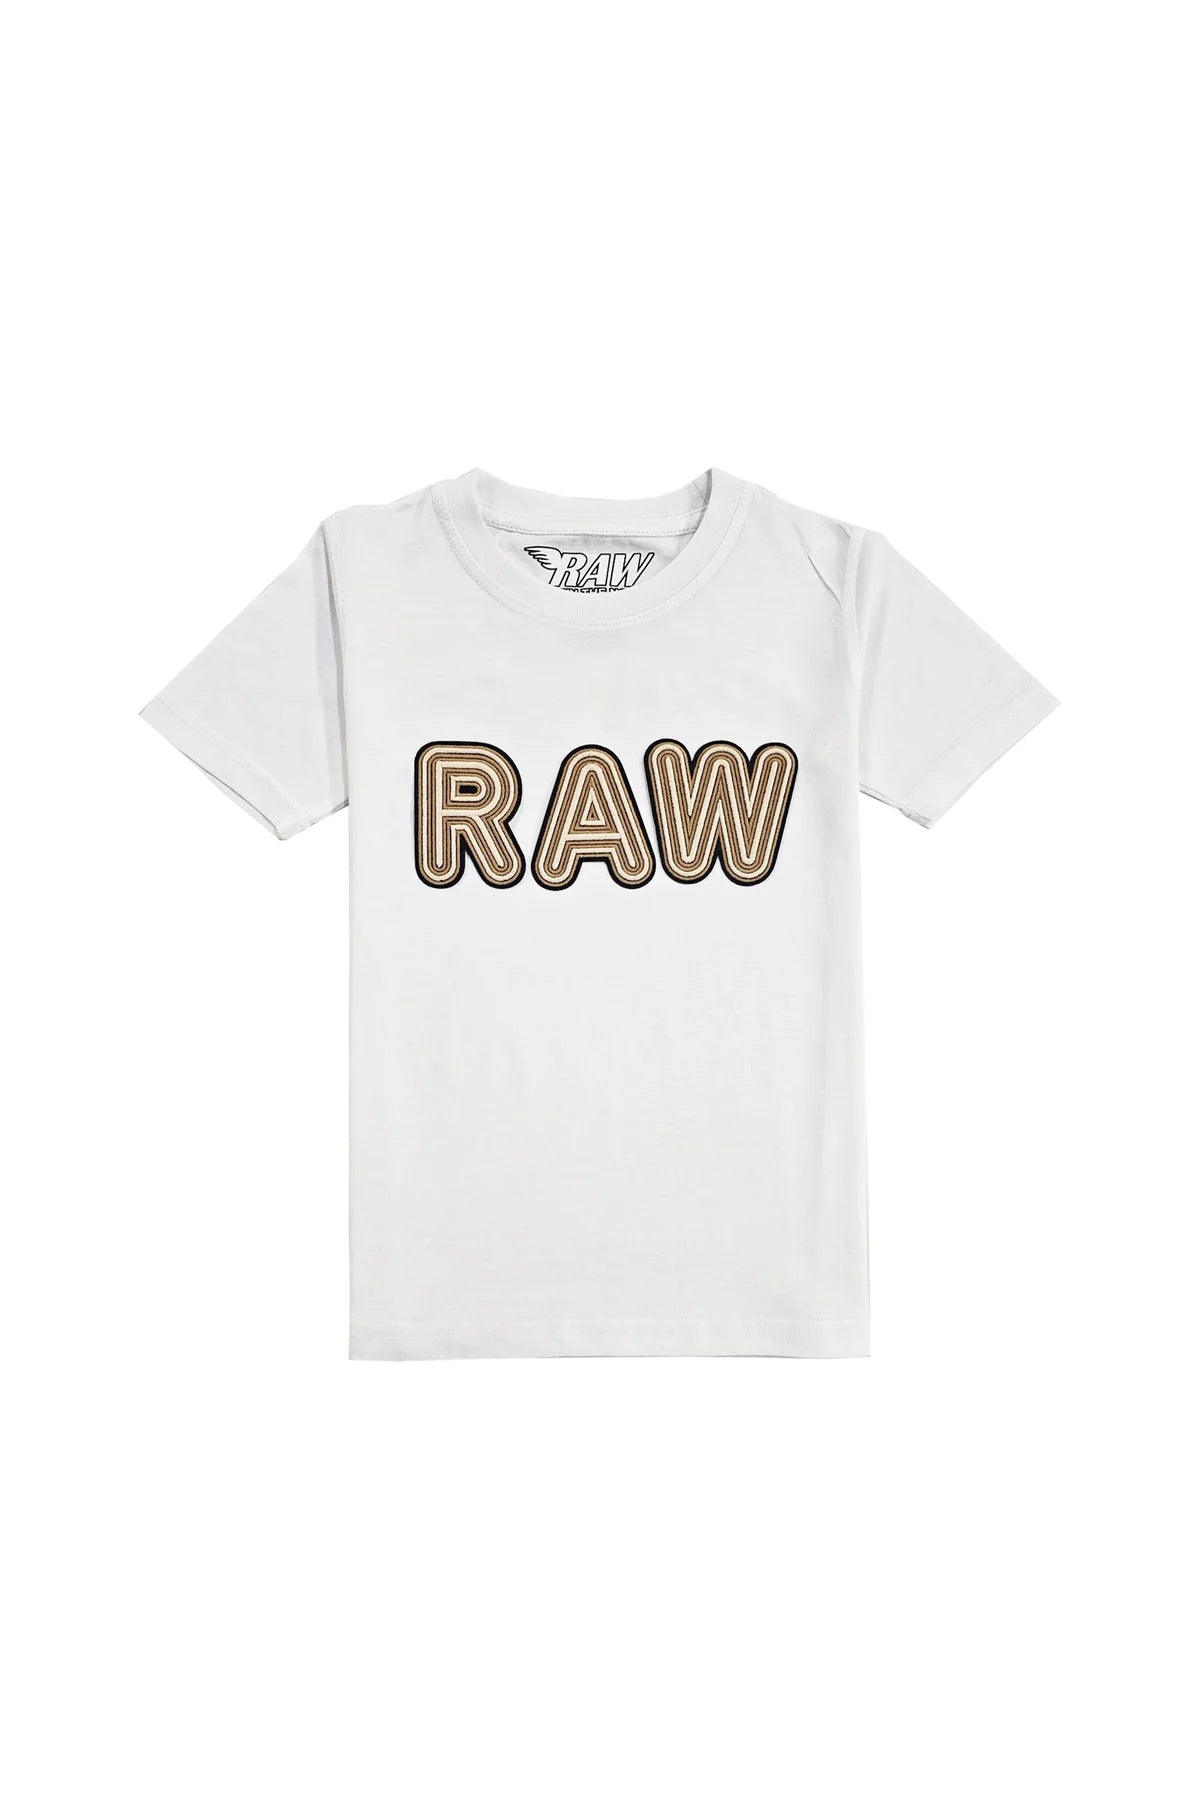 Kids "Raw" Embroidery T-Shirt - White/Brown/Cream